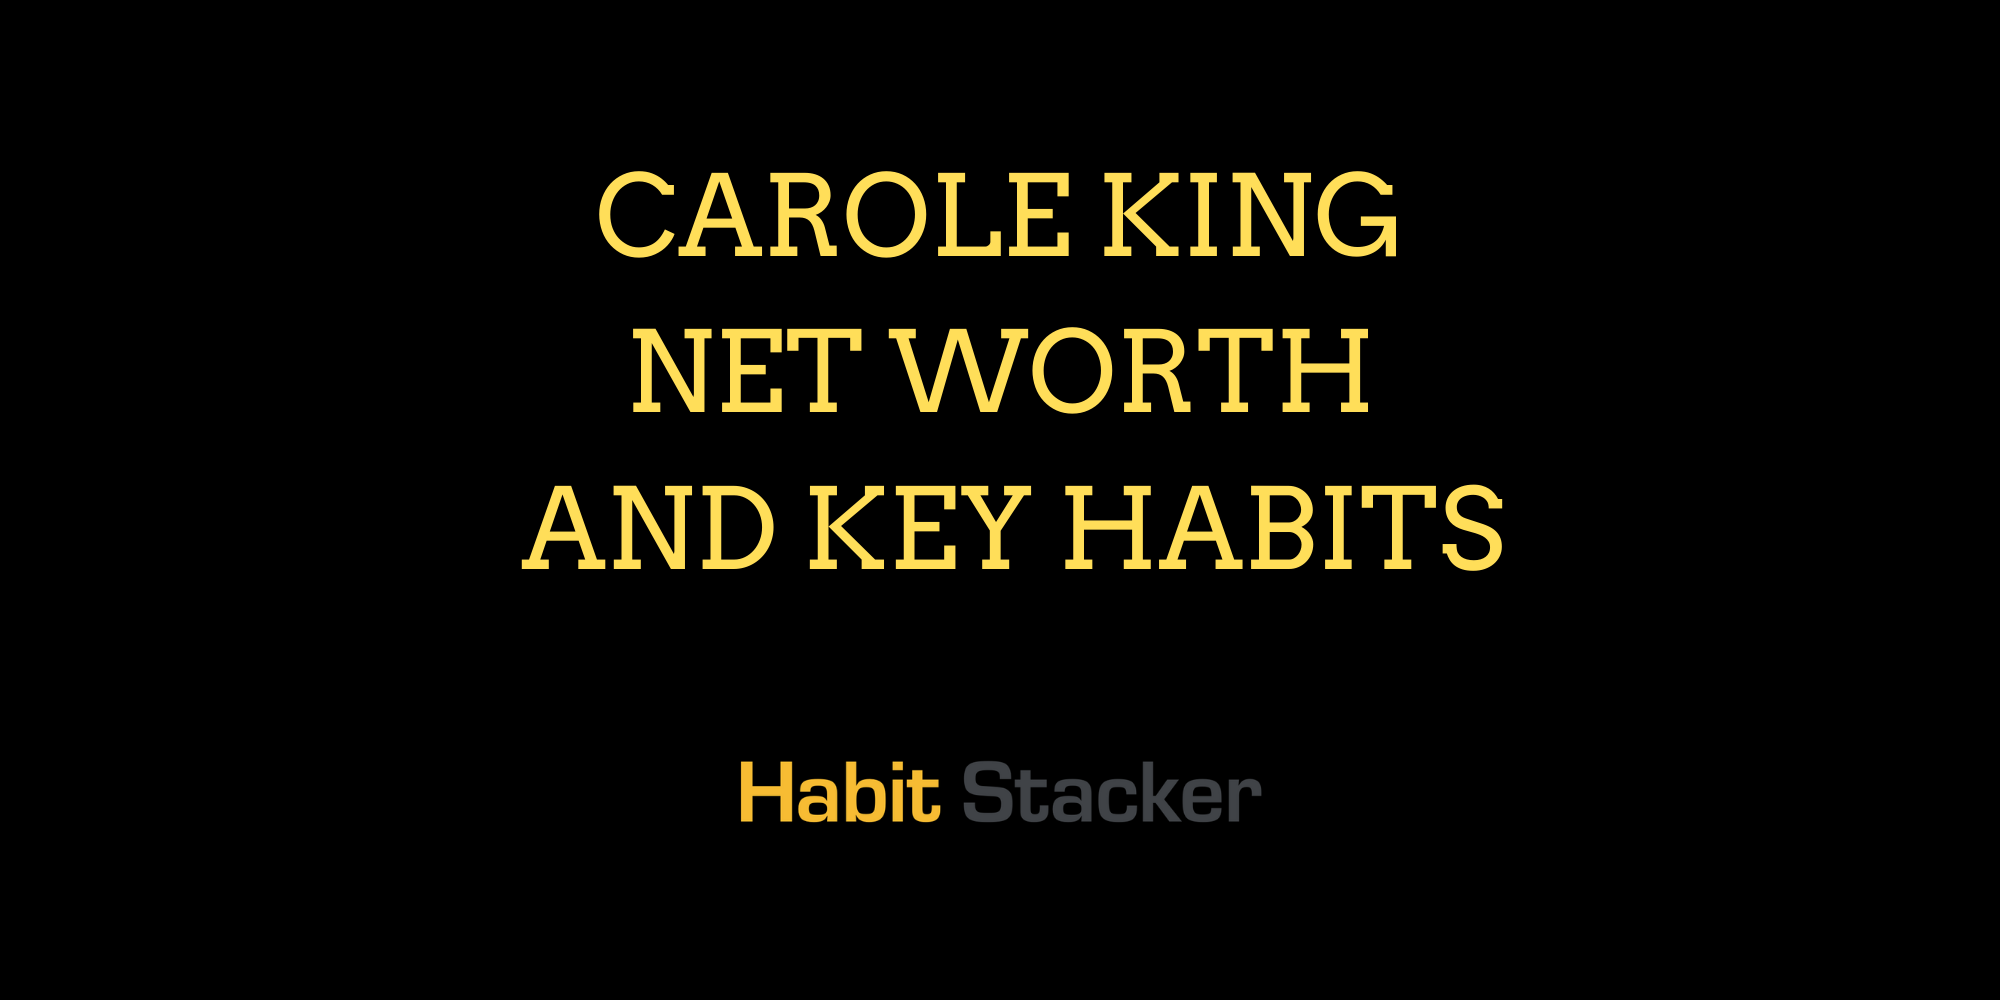 Carole King Net Worth and Key Habits